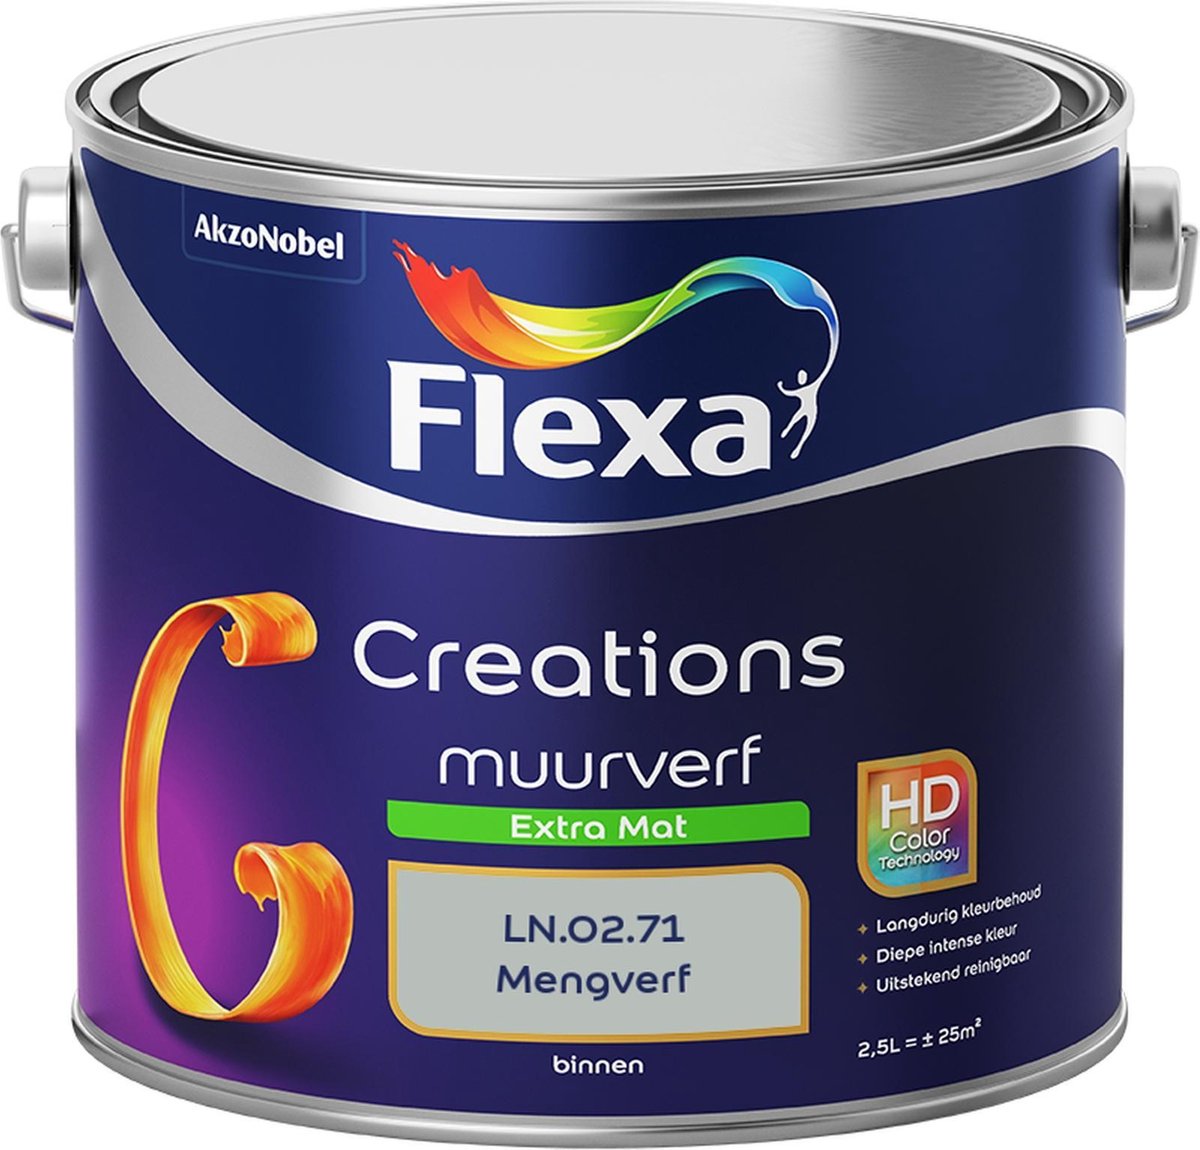 Flexa Creations Muurverf - Extra Mat - Colorfutures 2019 - LN.02.71 - 2,5 liter